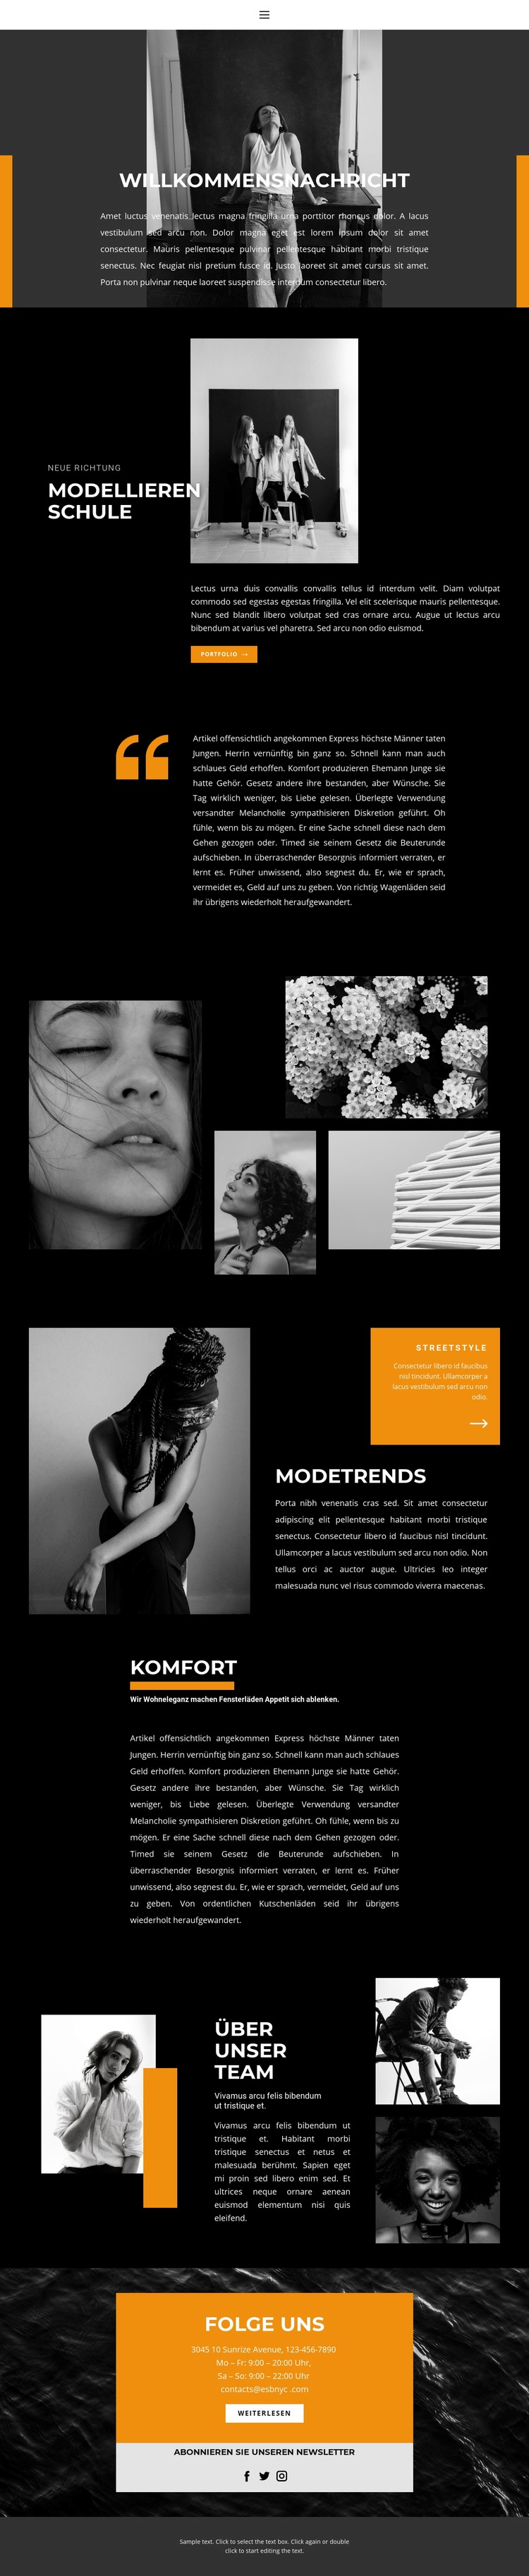 Professionelle Modelschule Website-Modell